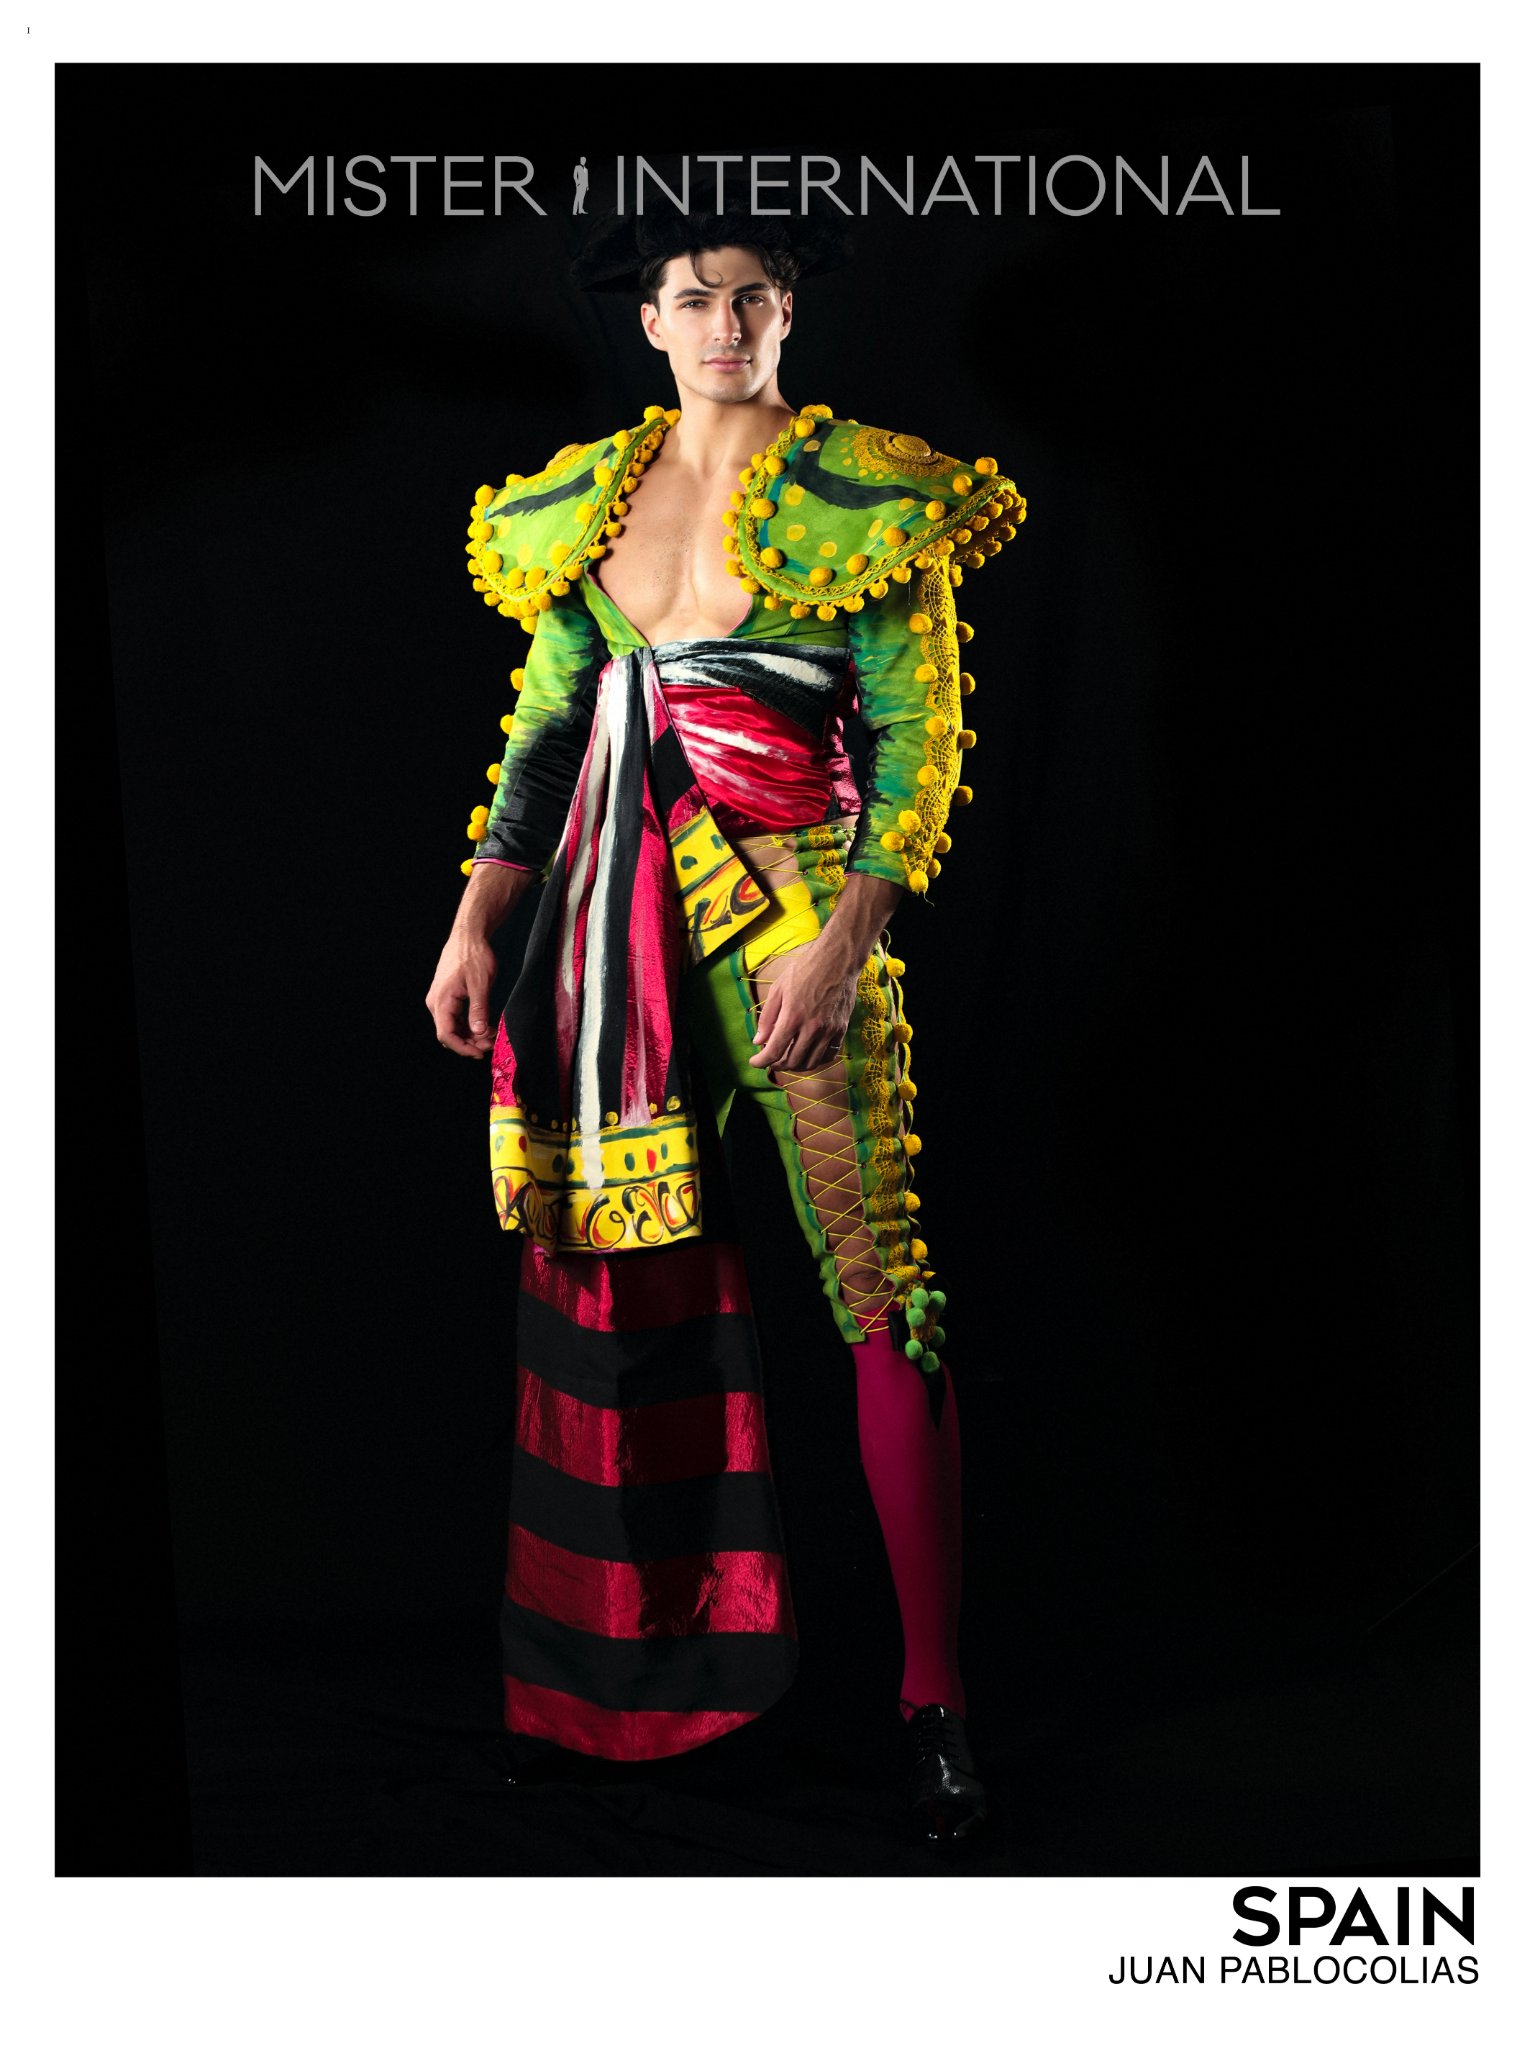 Mister International 2022 SPAIN Juan Pablo Colias National Costume Shot by Raymond Saldana